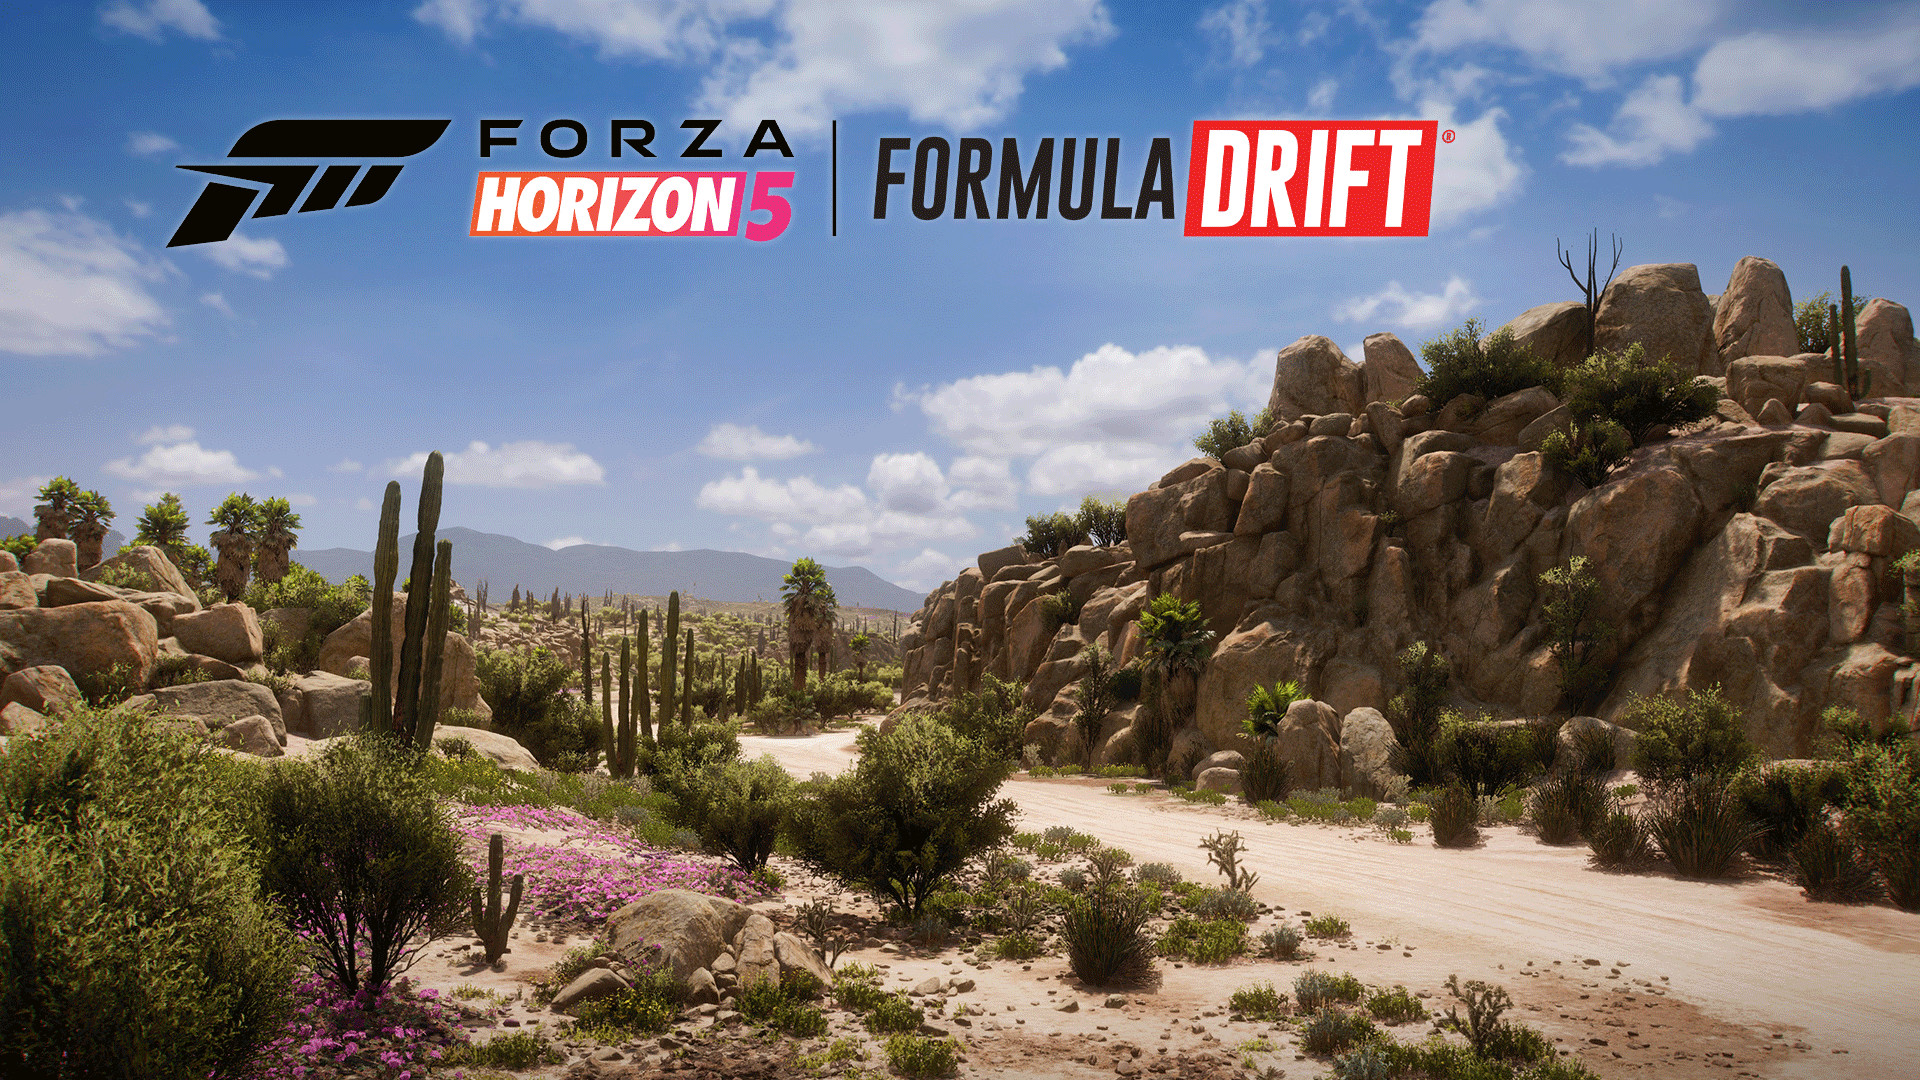 Forza Horizon 5 - Formula Drift Pack DLC Steam Altergift [USD 9.68]